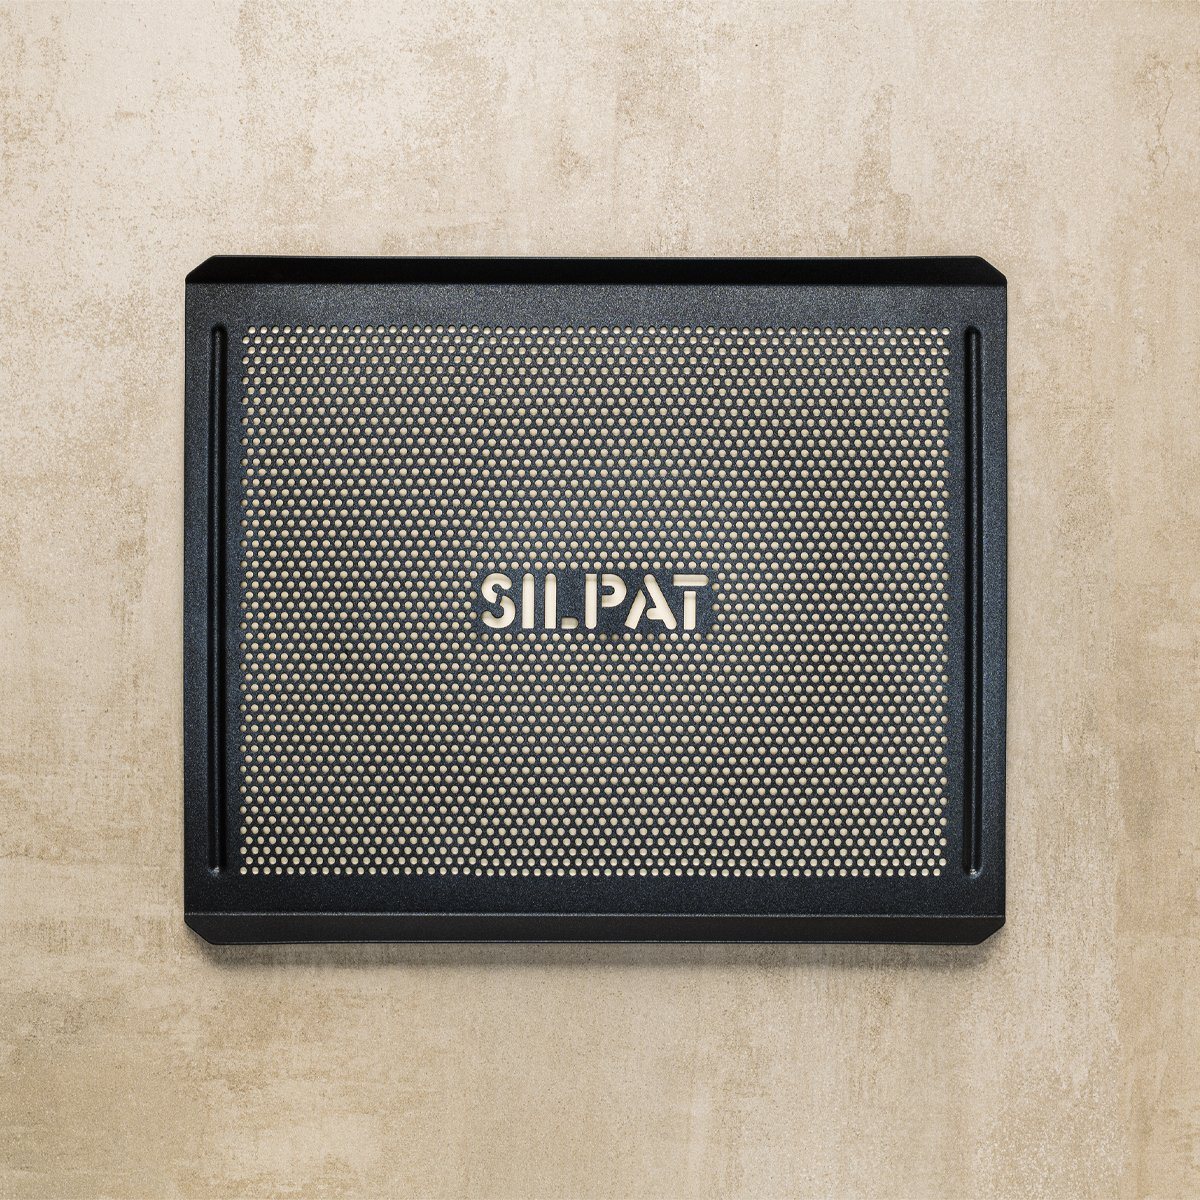 Starter Kit Silpat  Moule et tapis silicone bundle